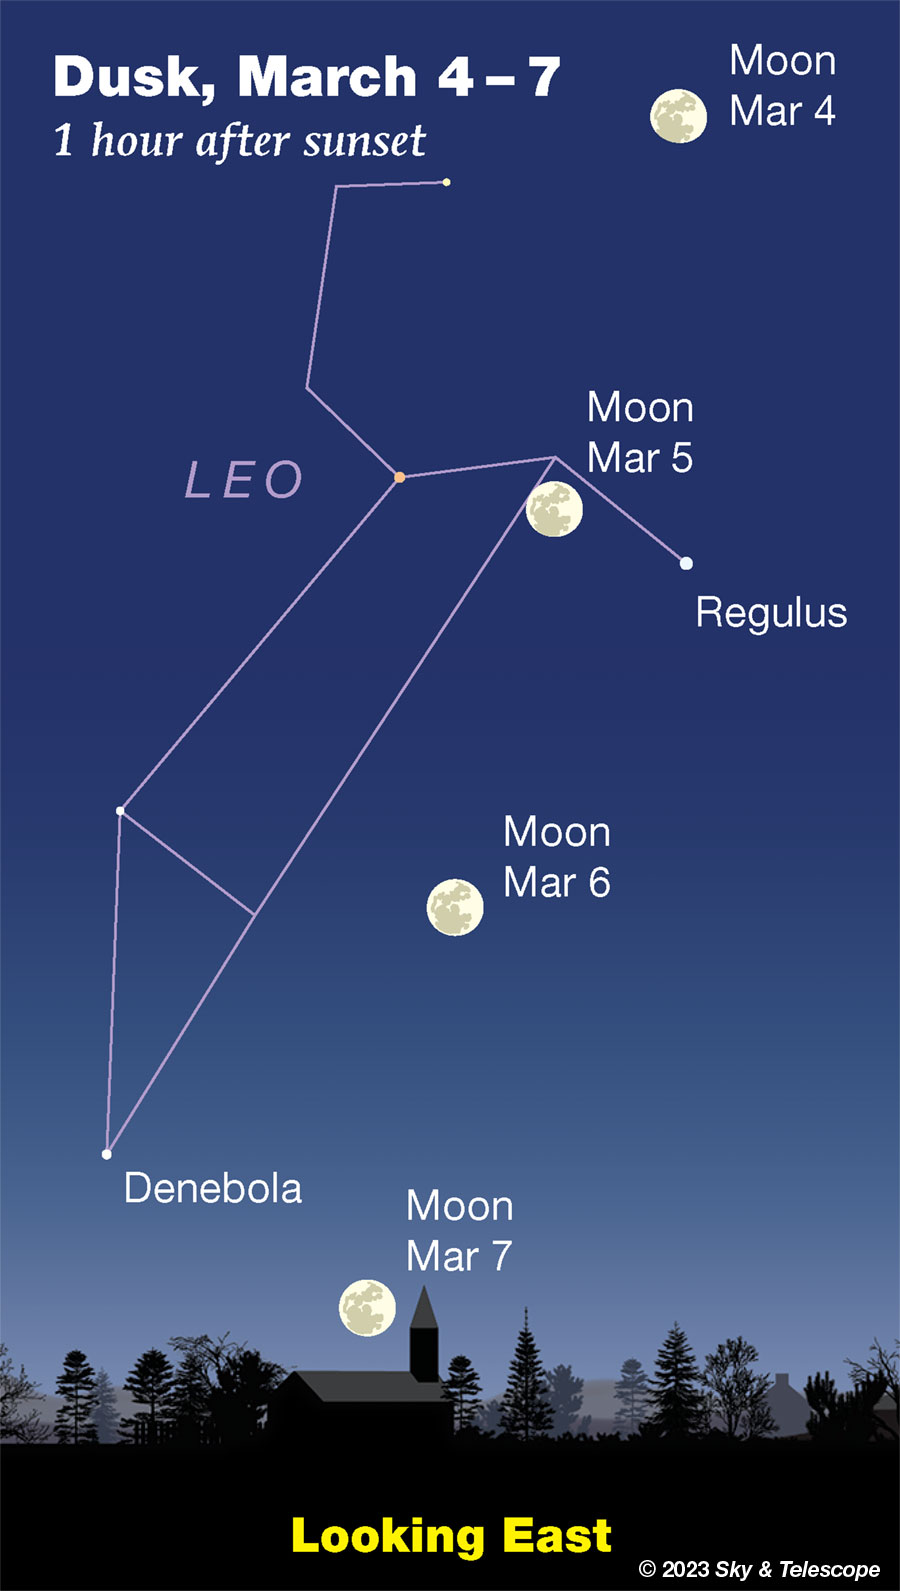 Moon crossing Leo, March 4-7, 2023